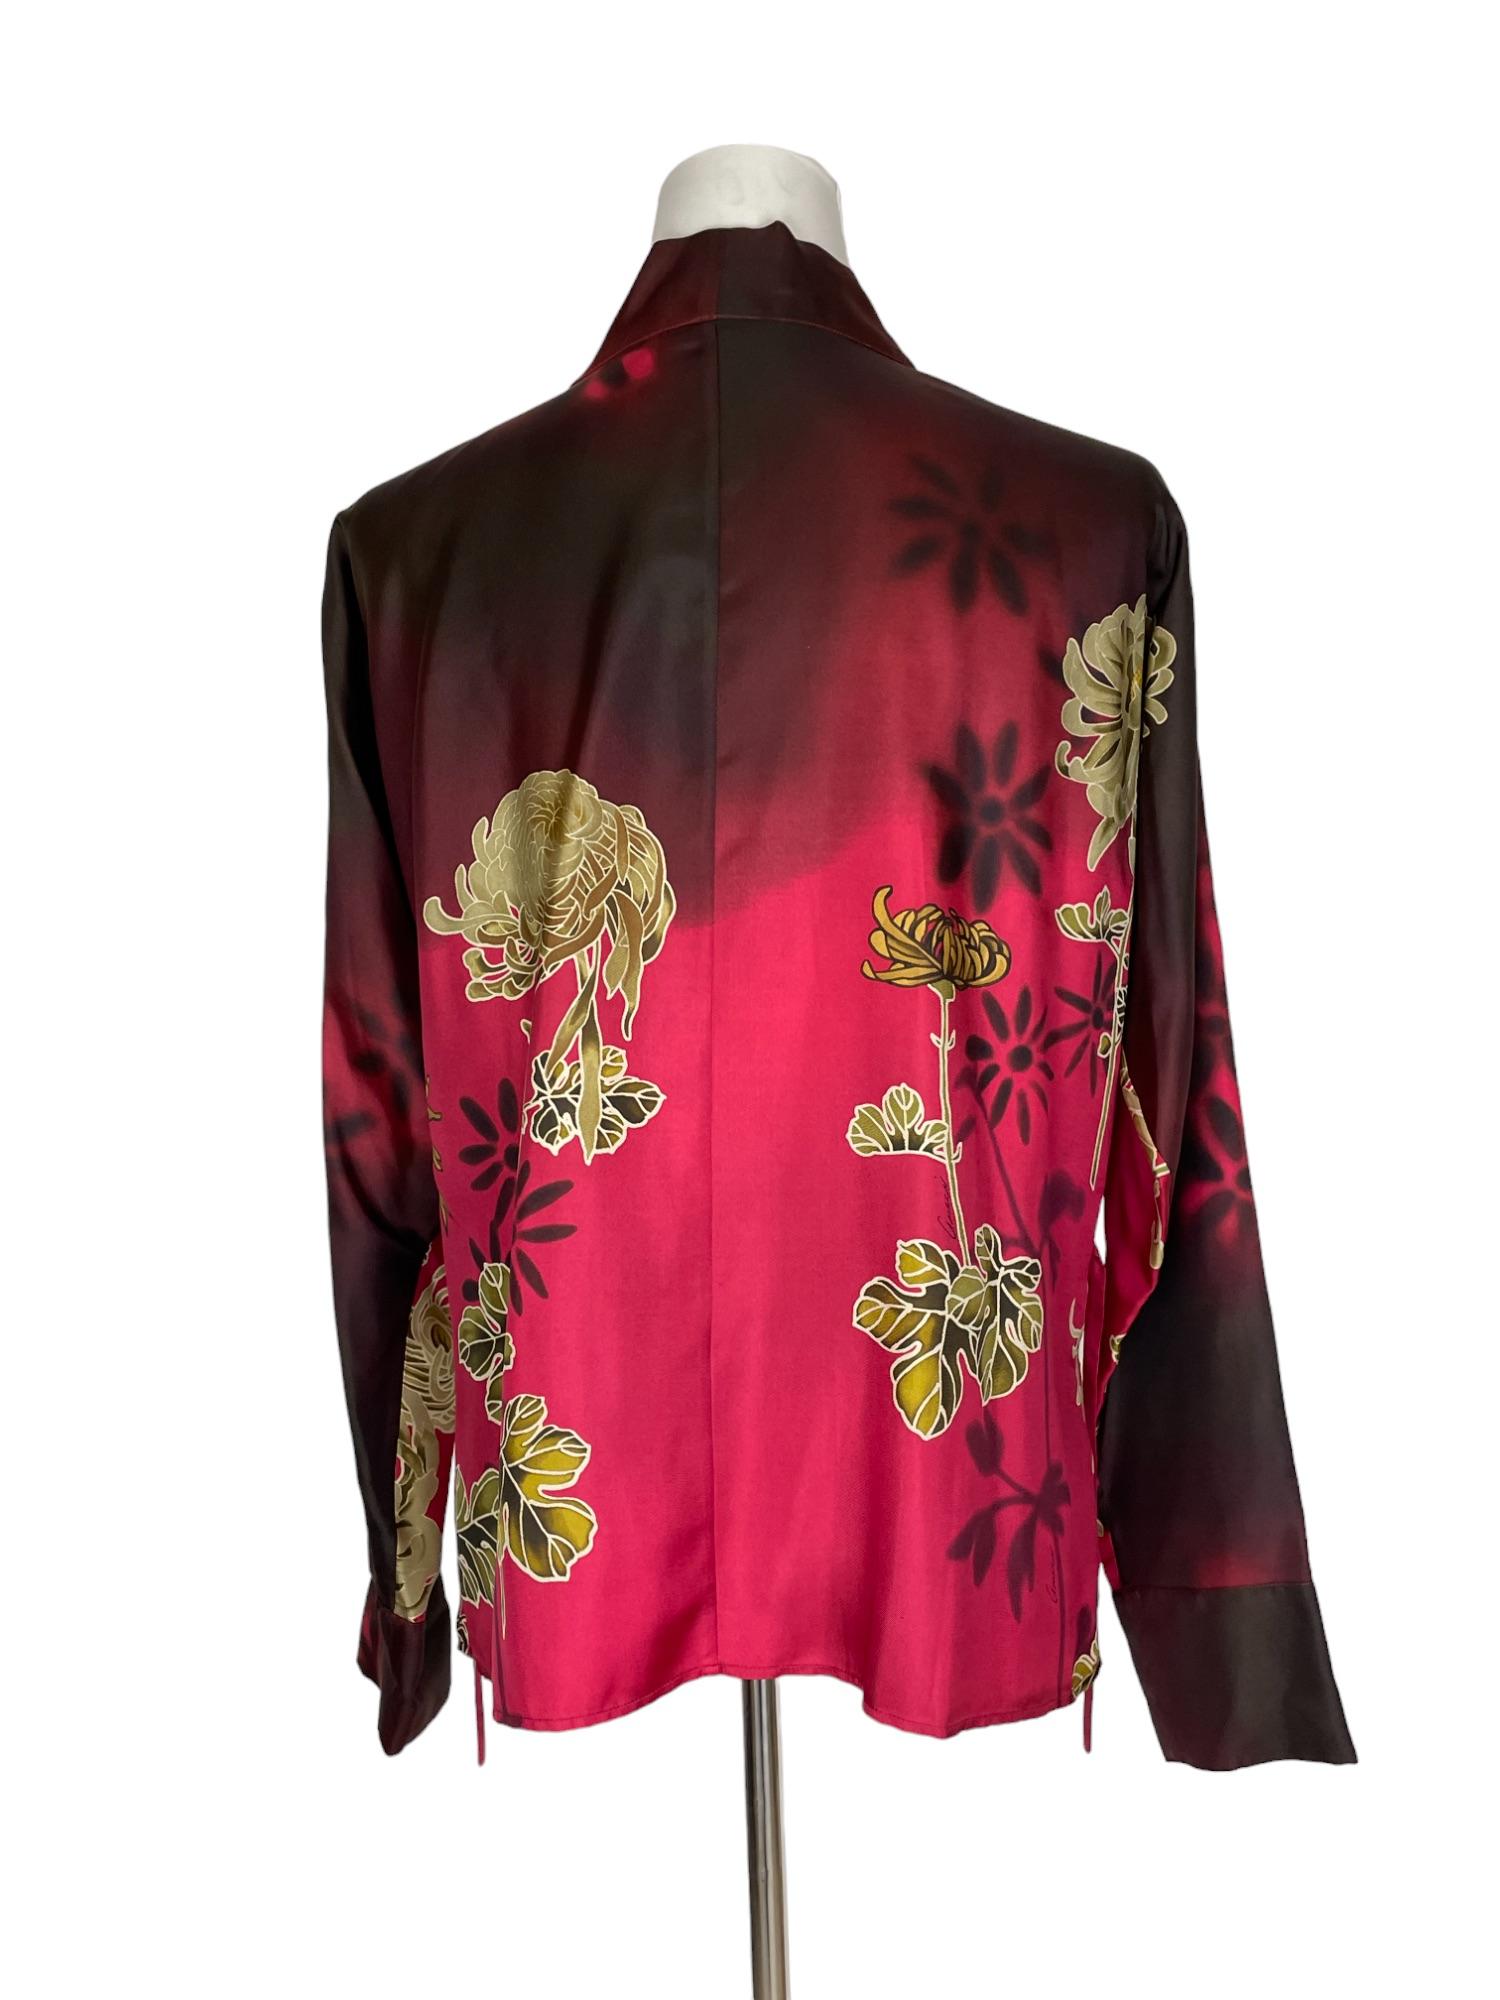 Rare Gucci Kimono Shirt 
Tom Ford Era 
Spring / Summer 2001
100% Silk
-
NO RETURNS
If you need more information, please contact us!